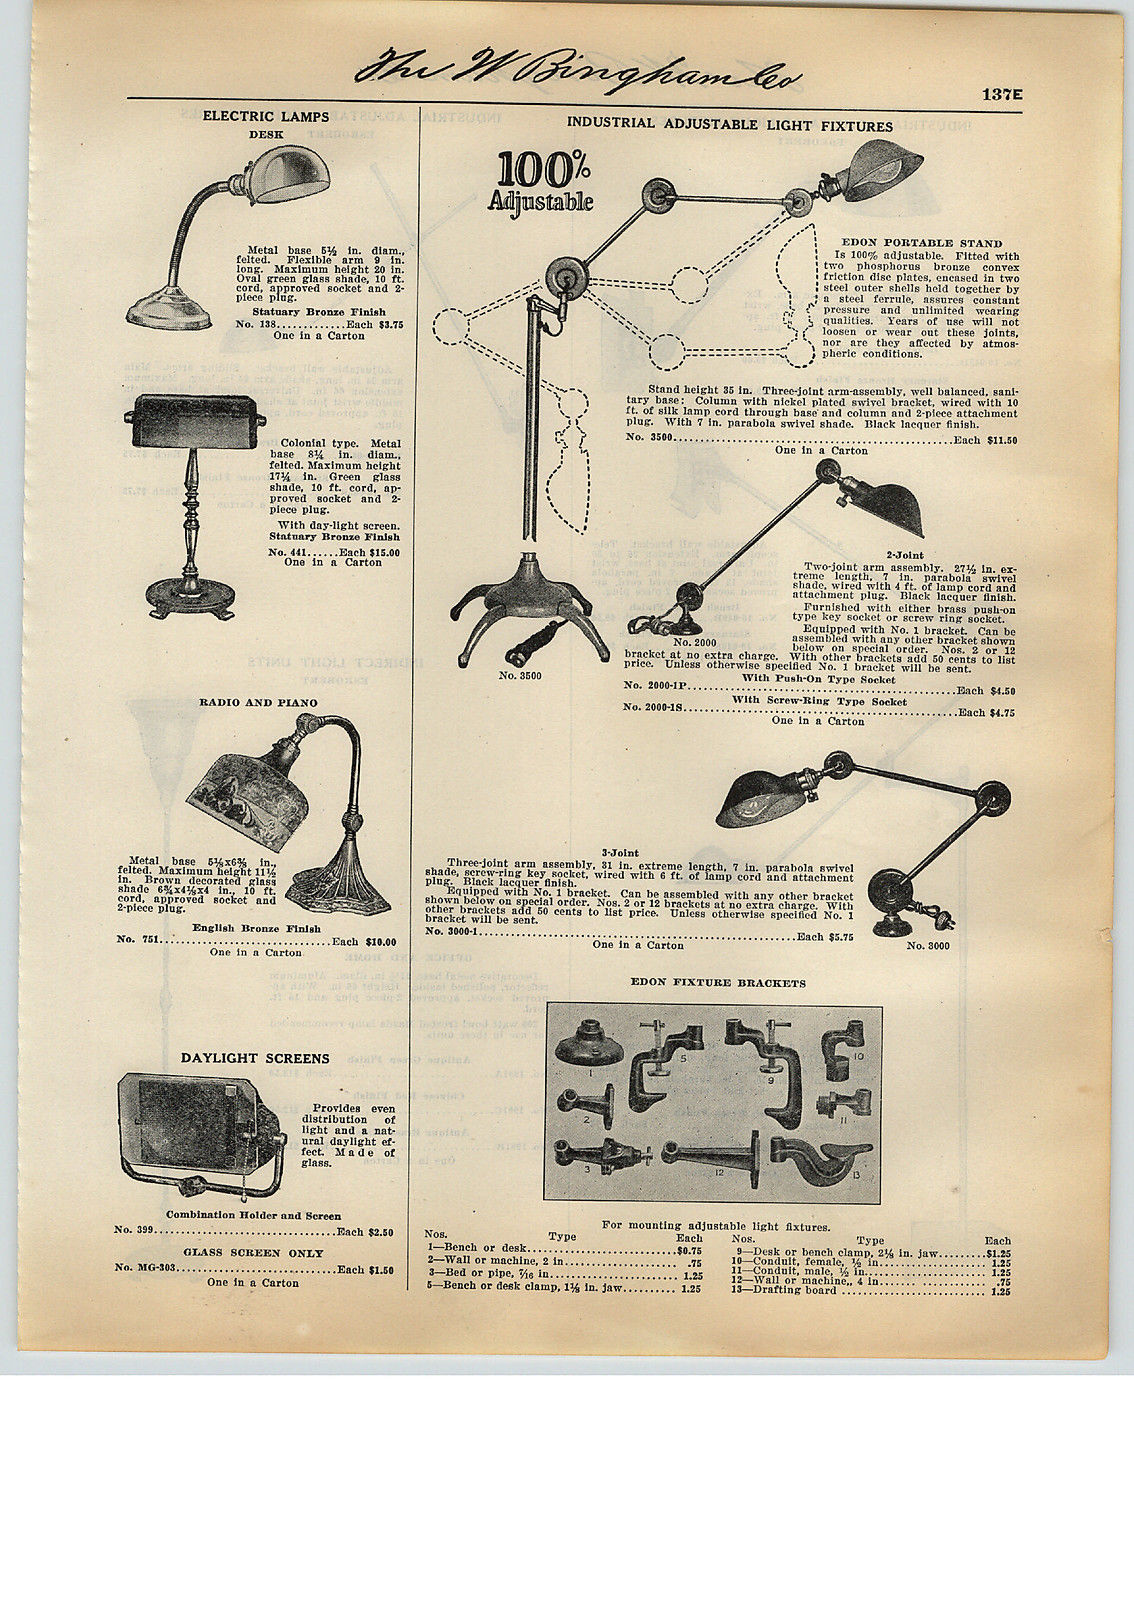 Antique Ad for Rare Edon Esrobert Clamp Light from 1930s